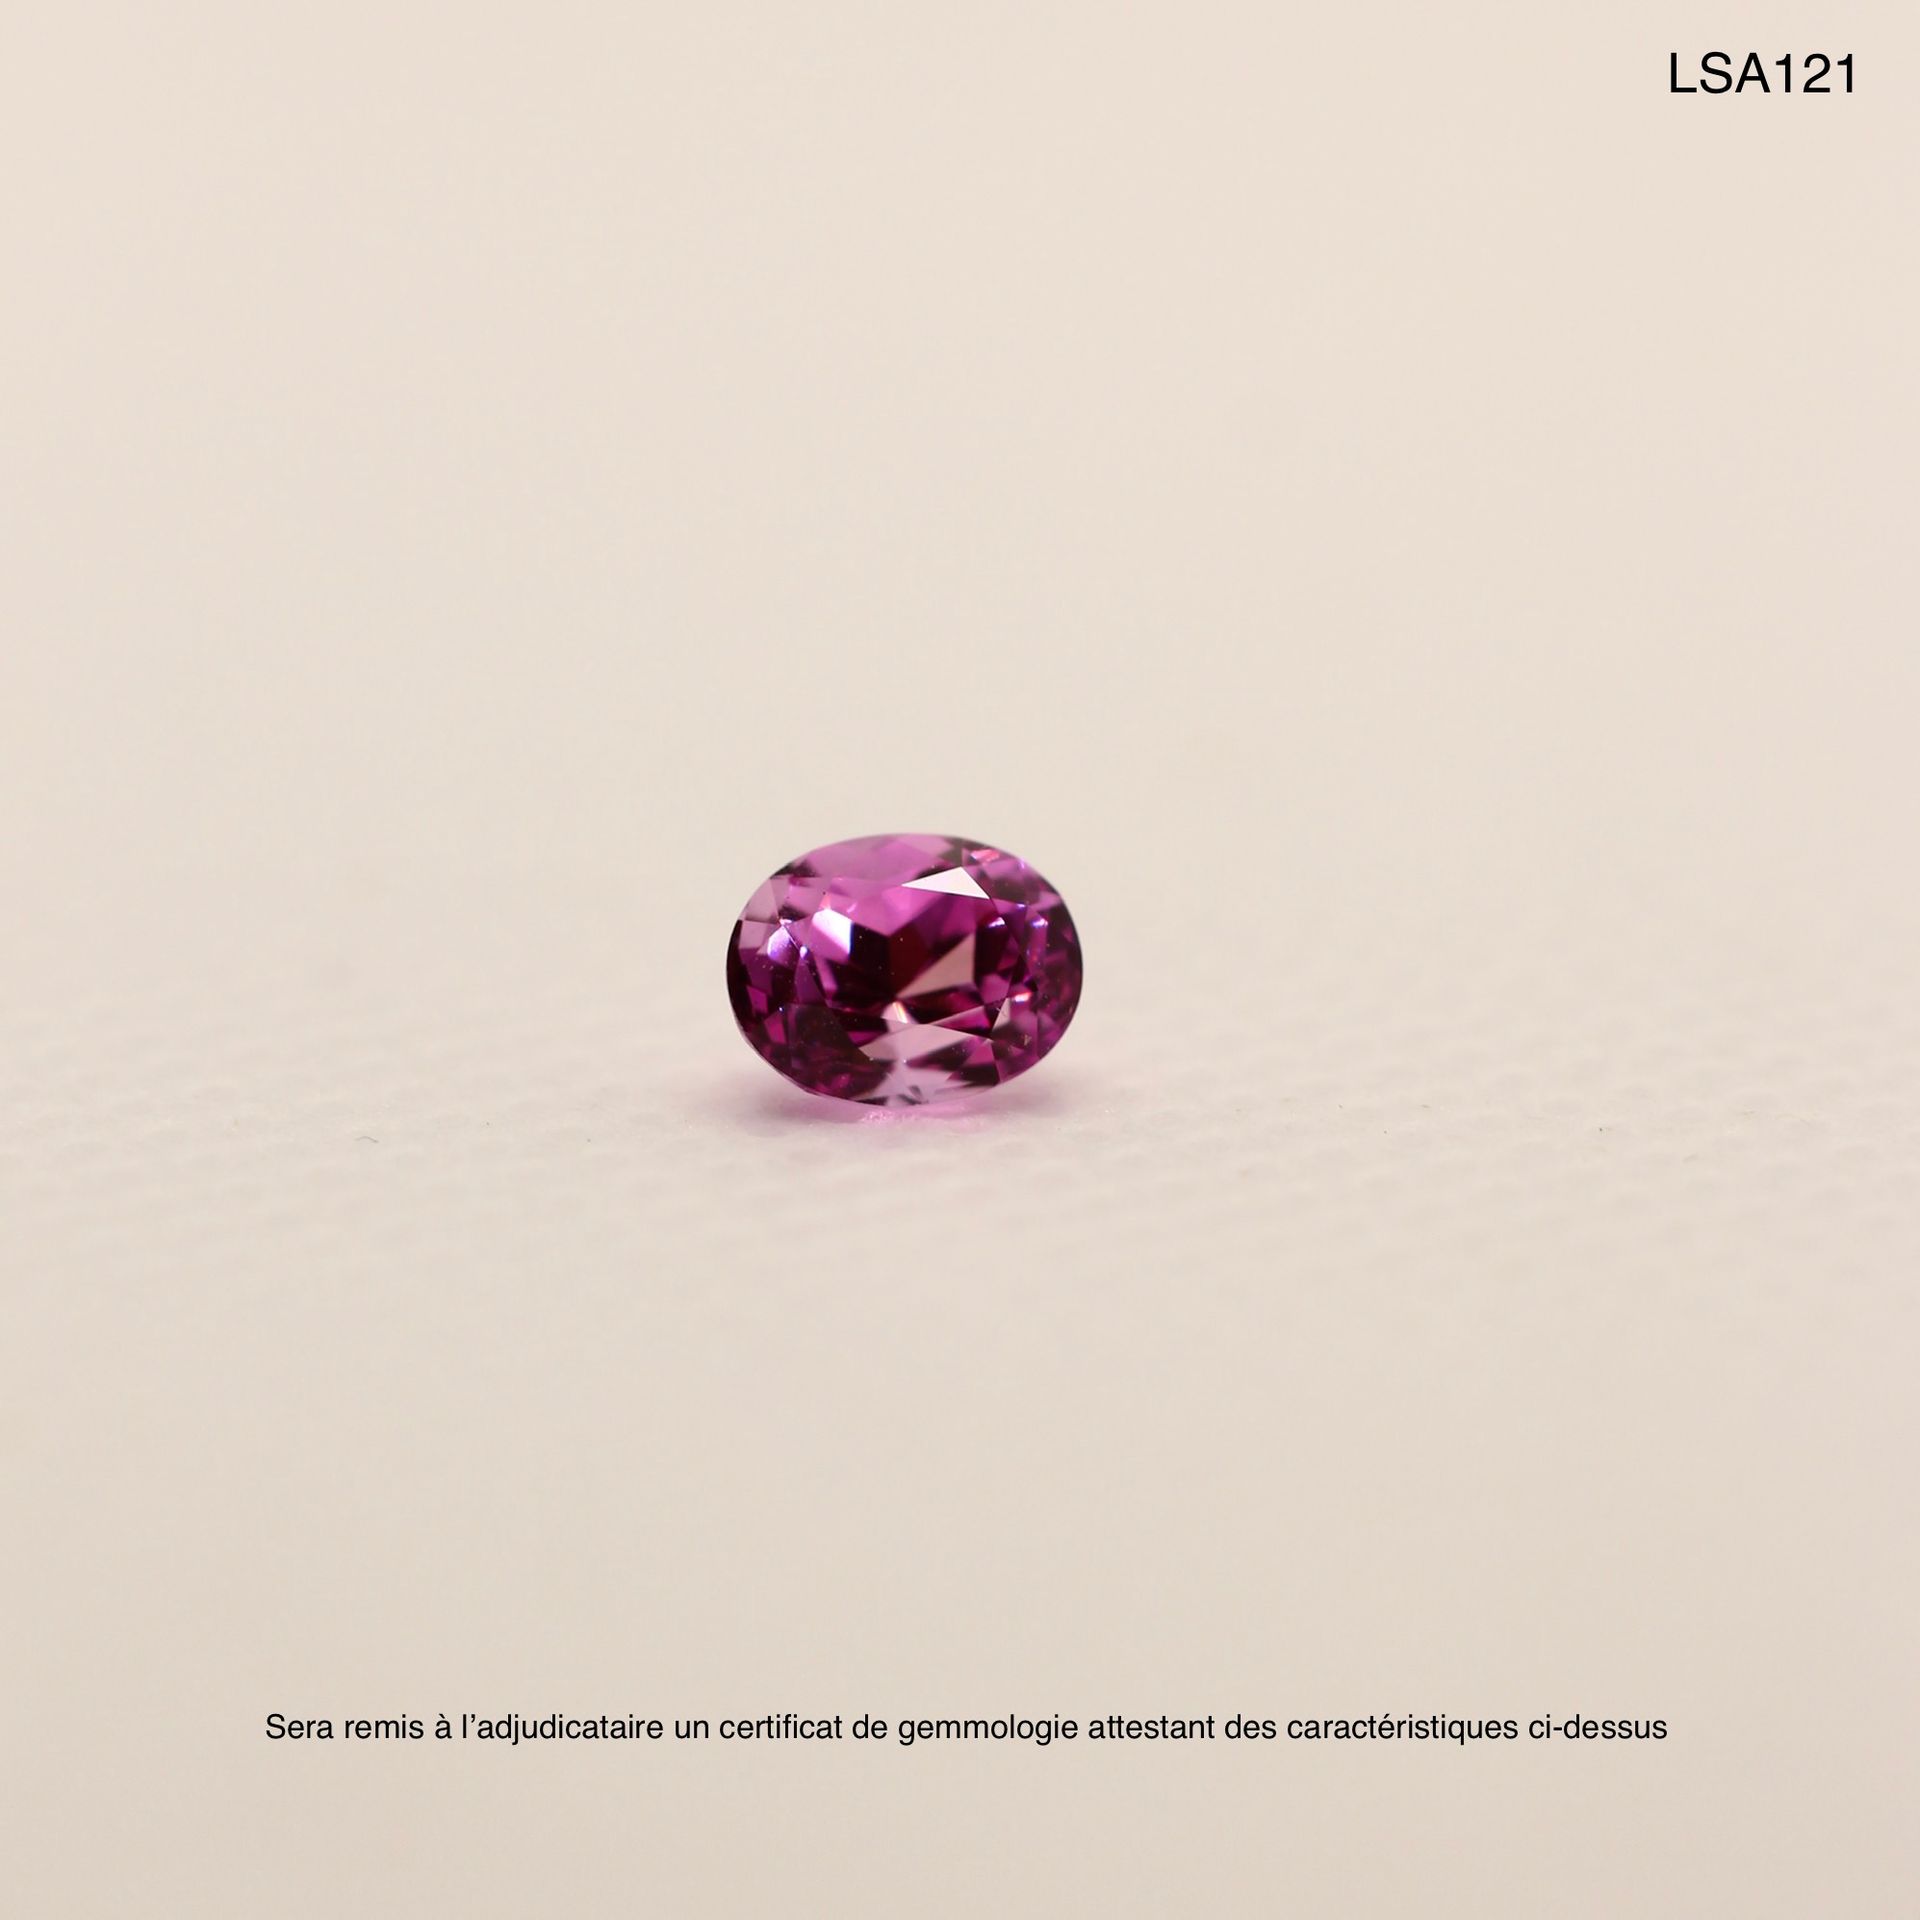 SAPHIRS TAILLÉS 拍品编号：LSA121

原产地: 马达加斯加

治疗: Ø

颜色：粉红色

形状: 椭圆形

尺寸：5.7mm x 4.4m&hellip;